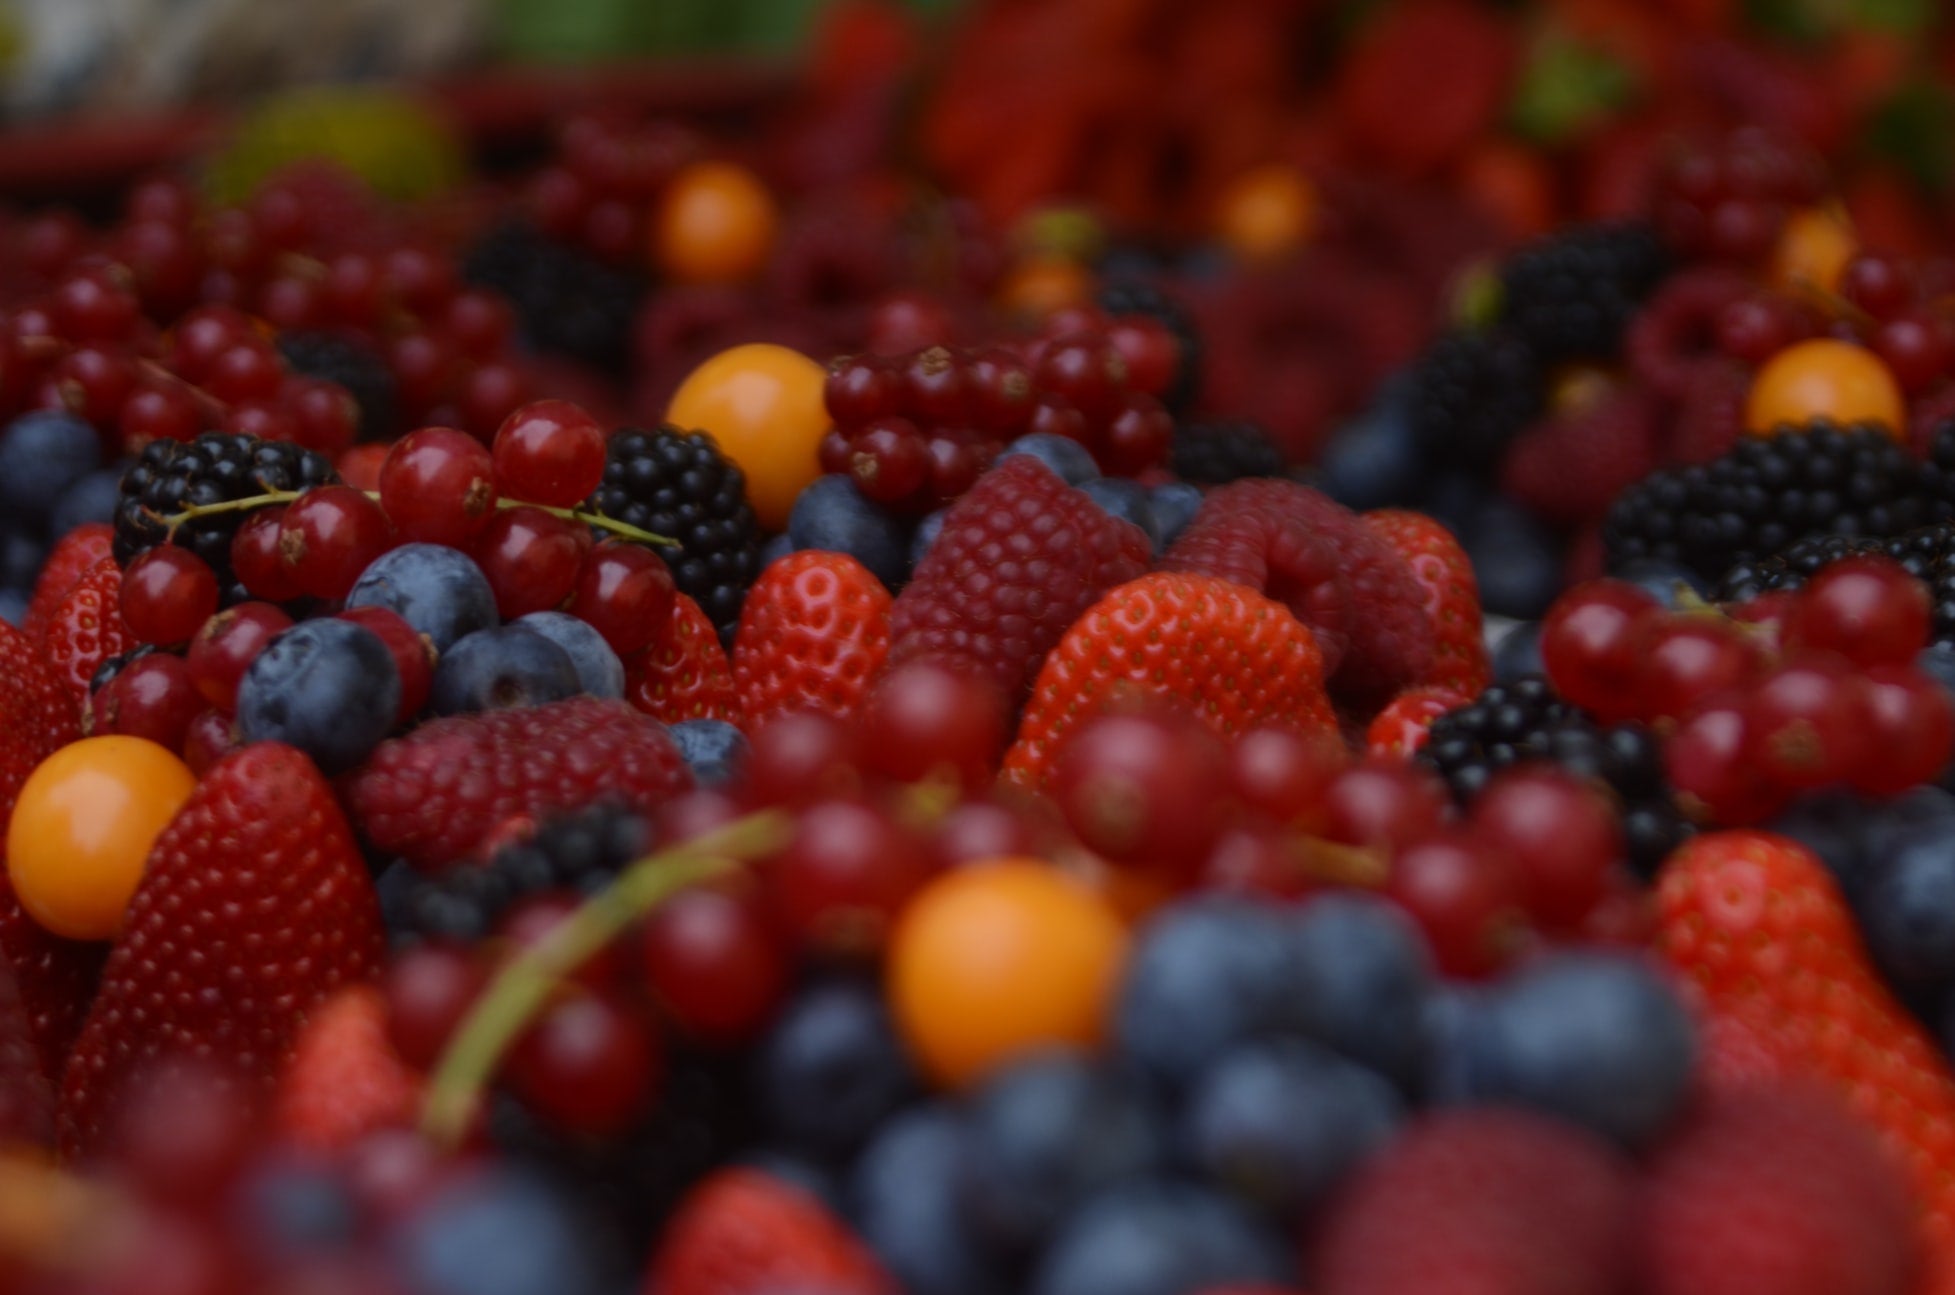 Fruity flavour profile